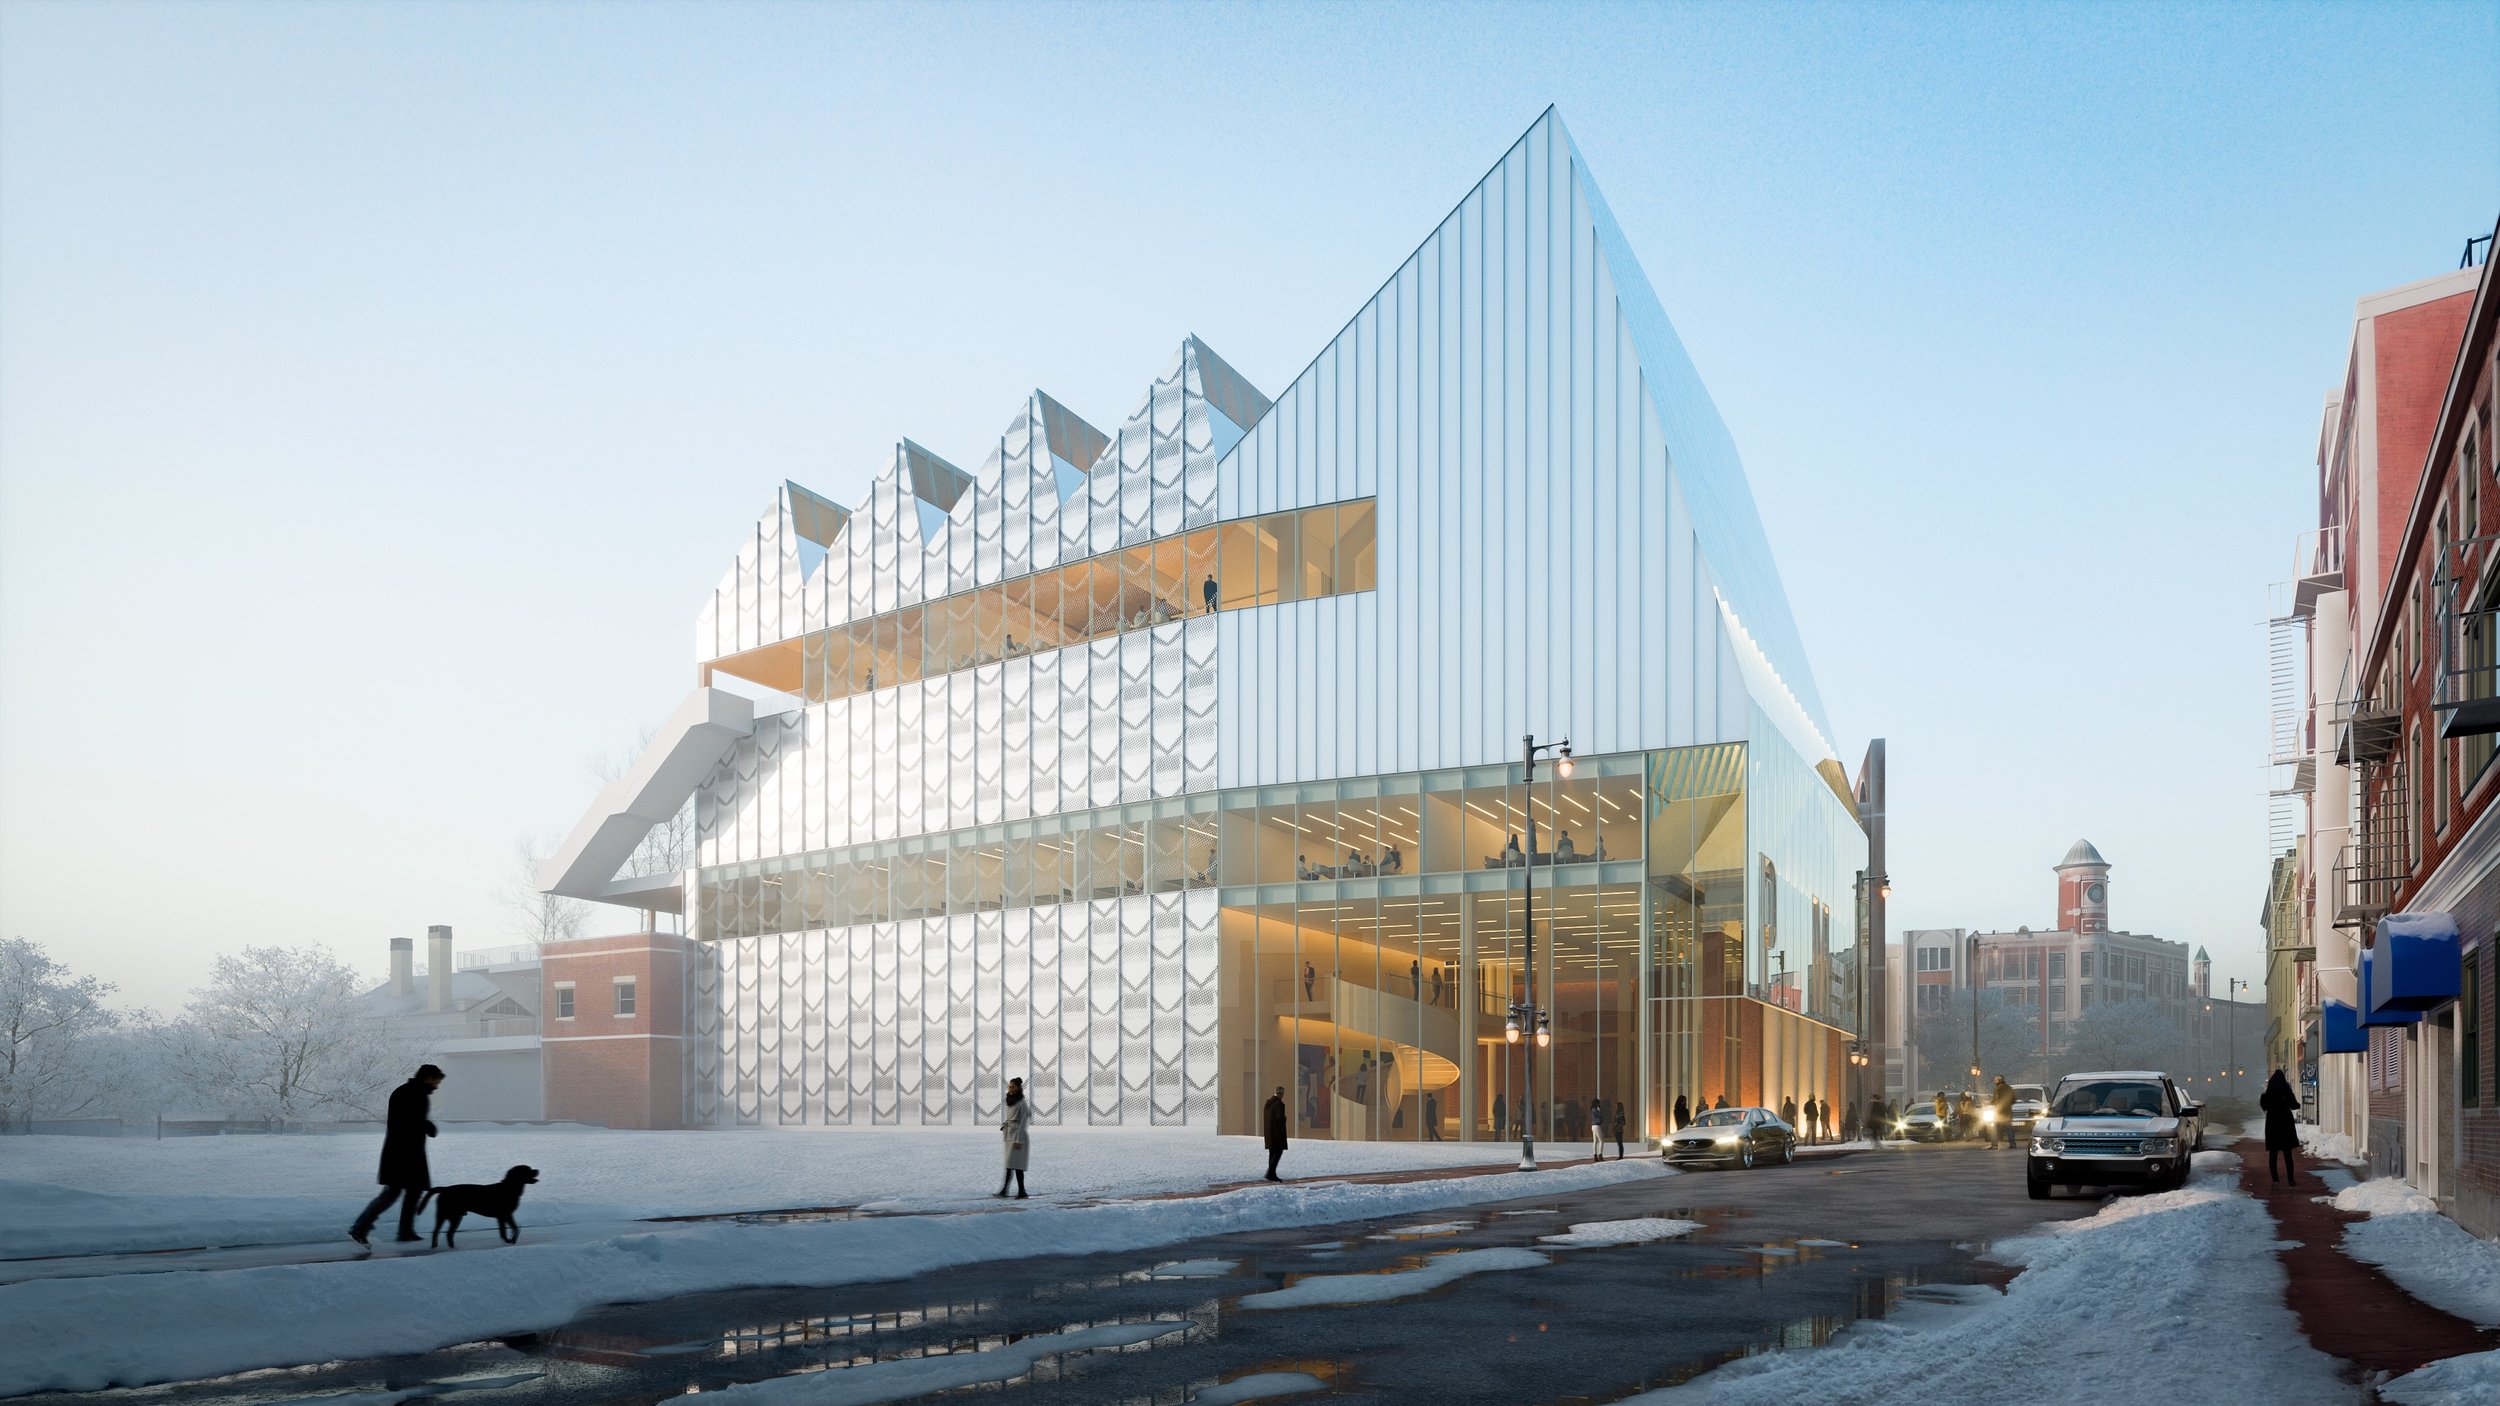  Toshiko Mori Architect/ The Portland Museum of Art, Maine/ Dovetail Design Strategists 